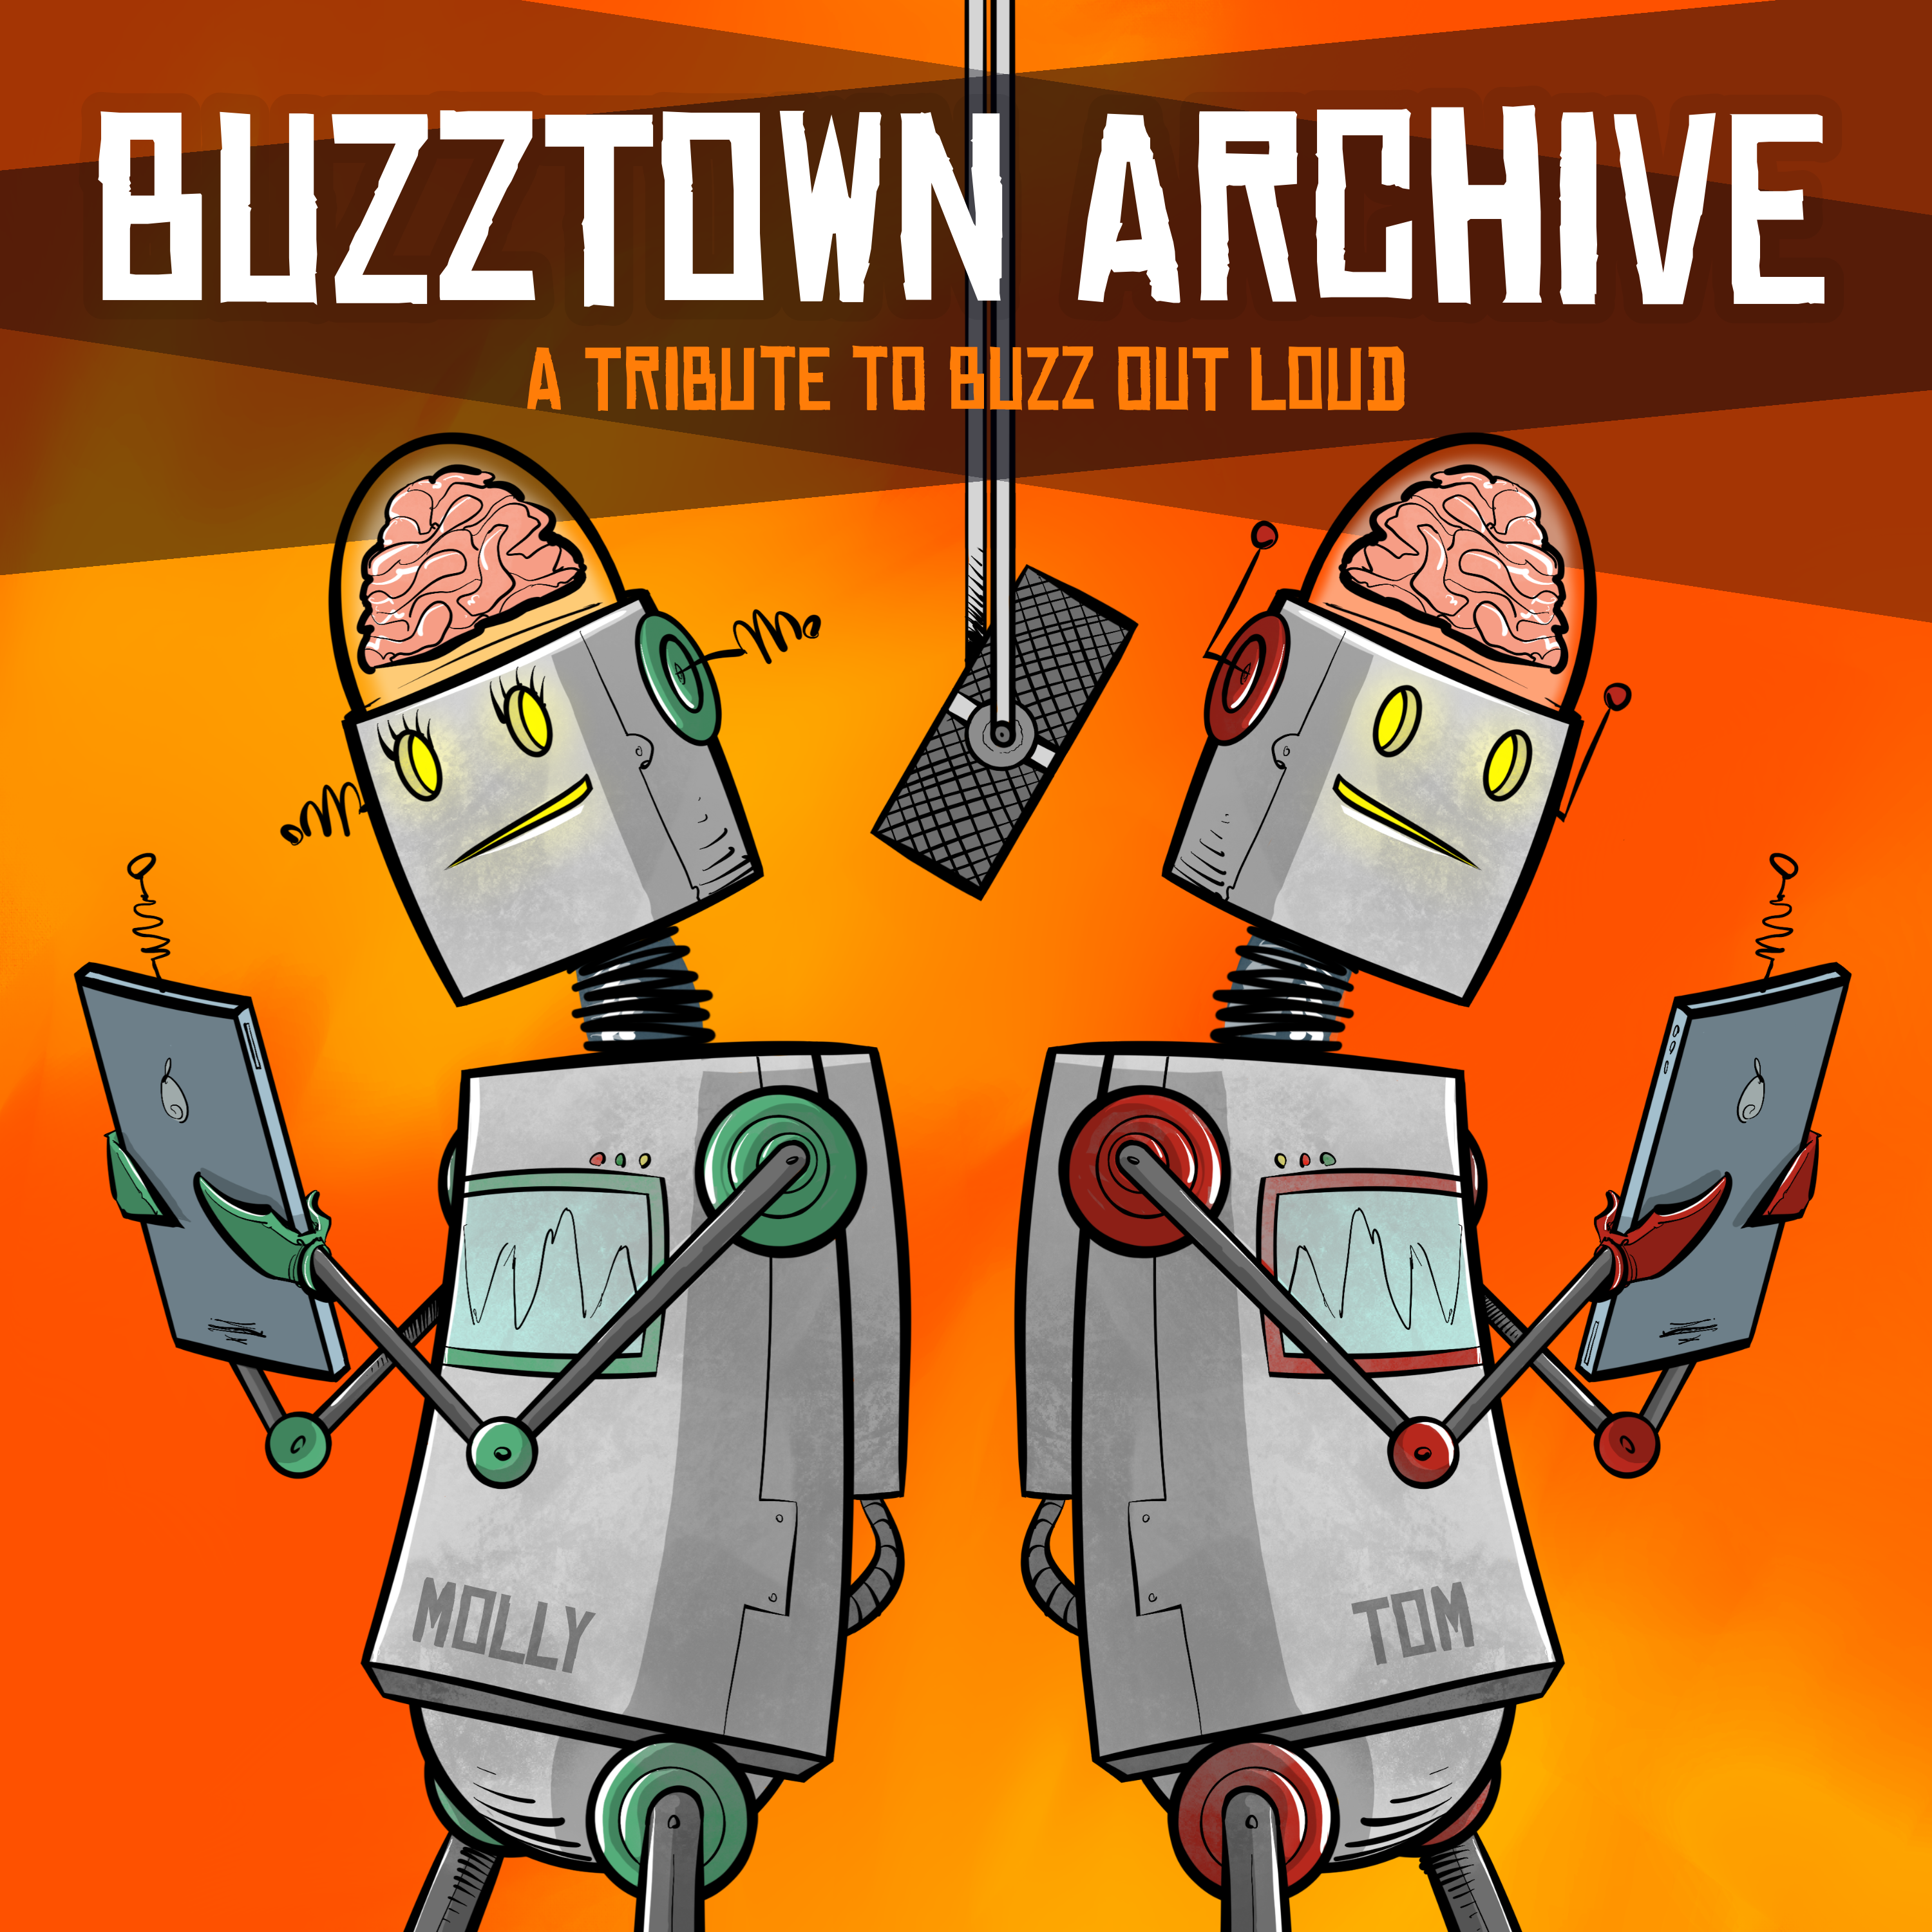 Buzztown Archive